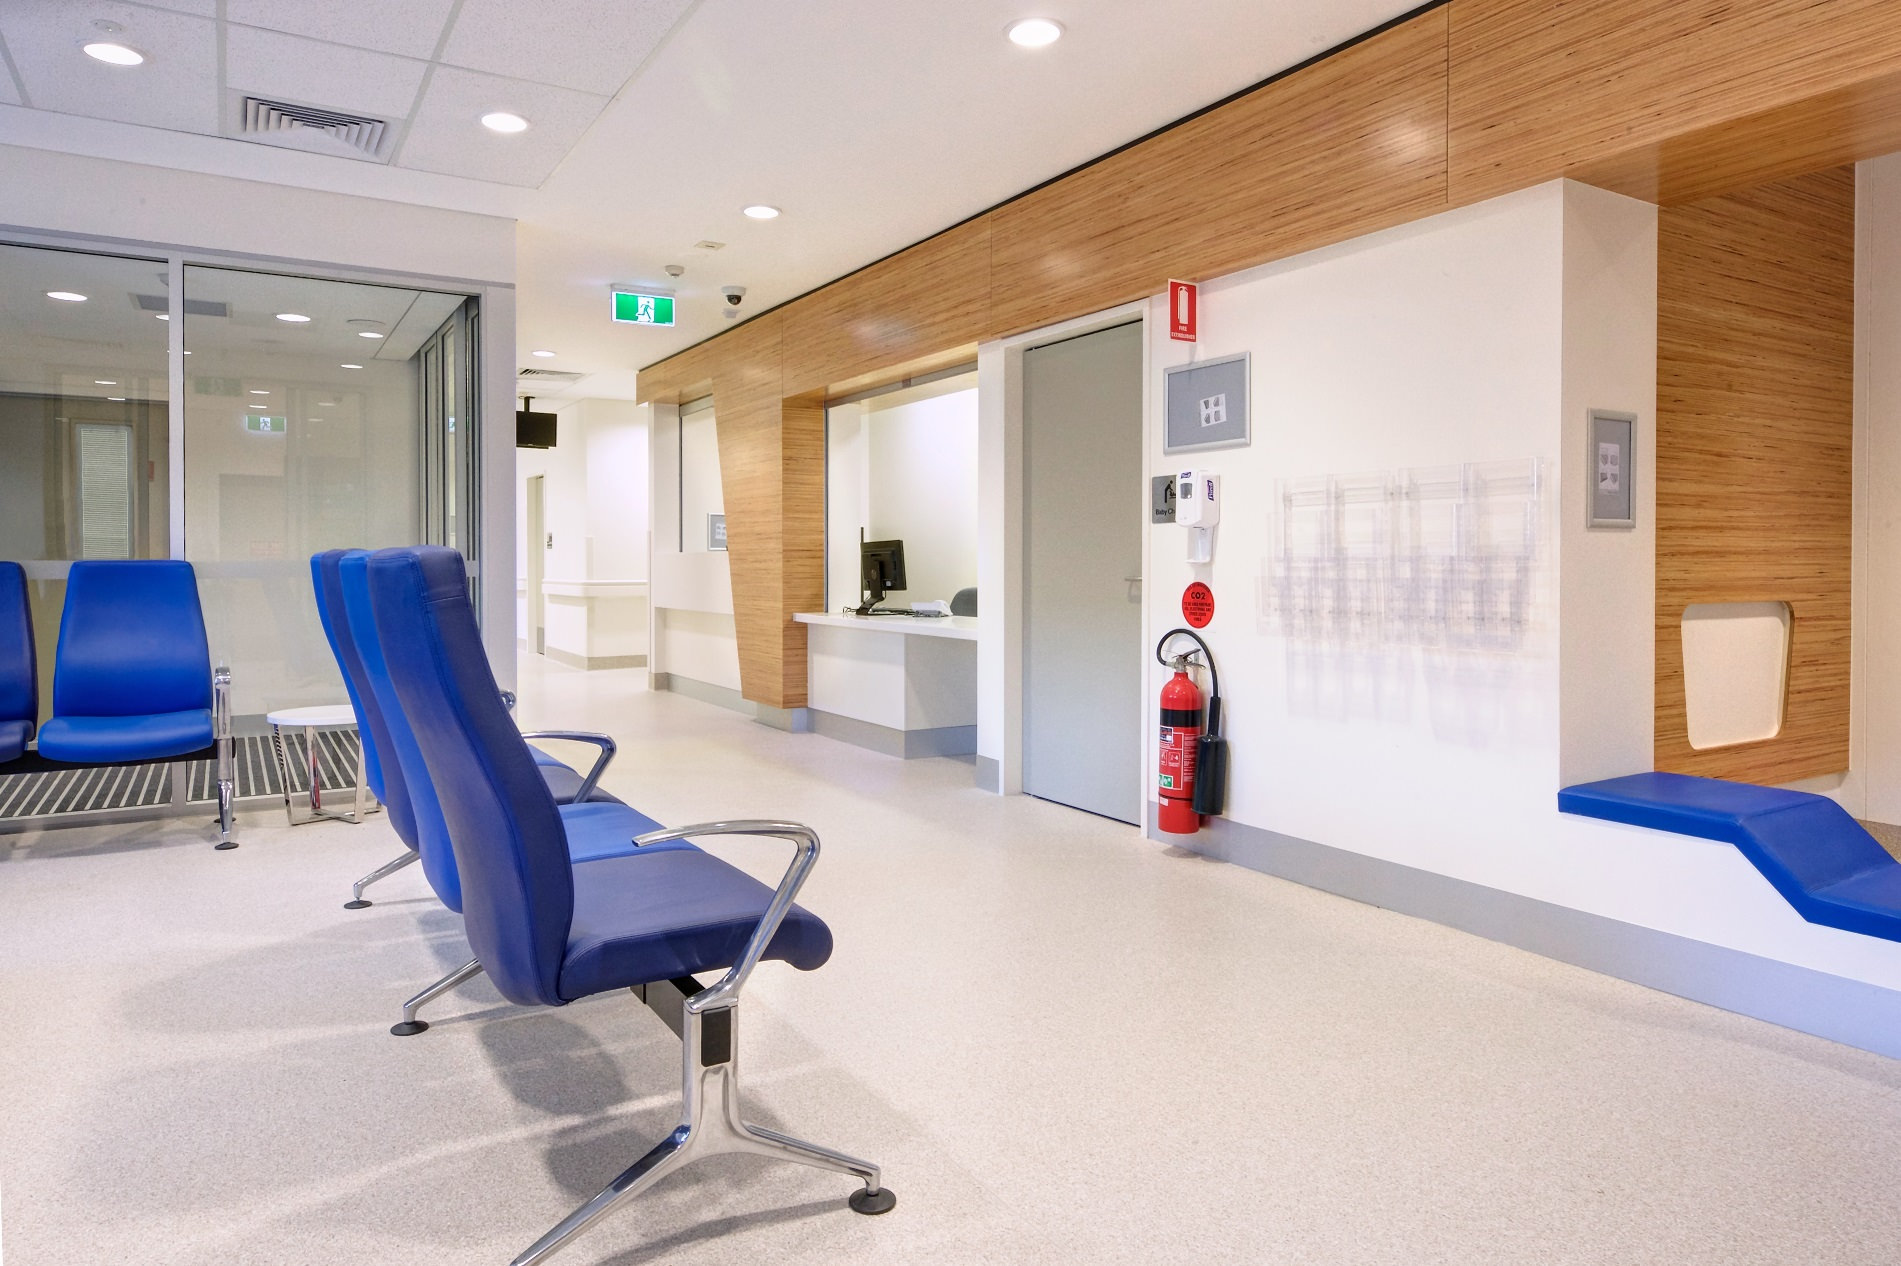 Shellharbour Hospital Ambulatory Care Centre